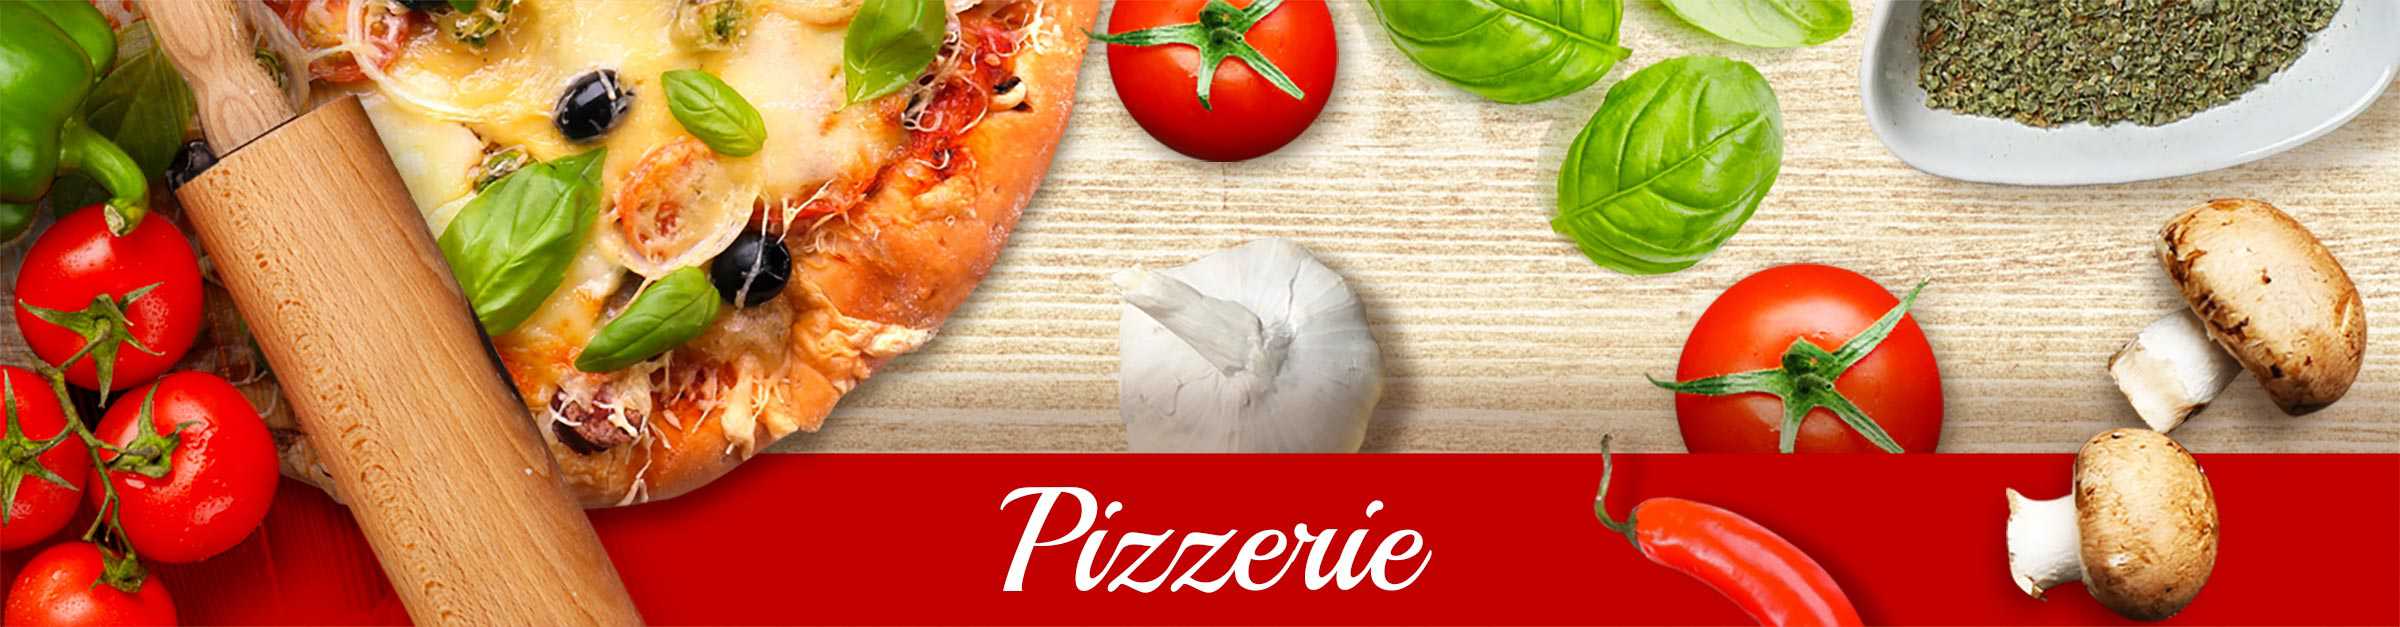 Sezione Pizzerie - Simon Italian Food